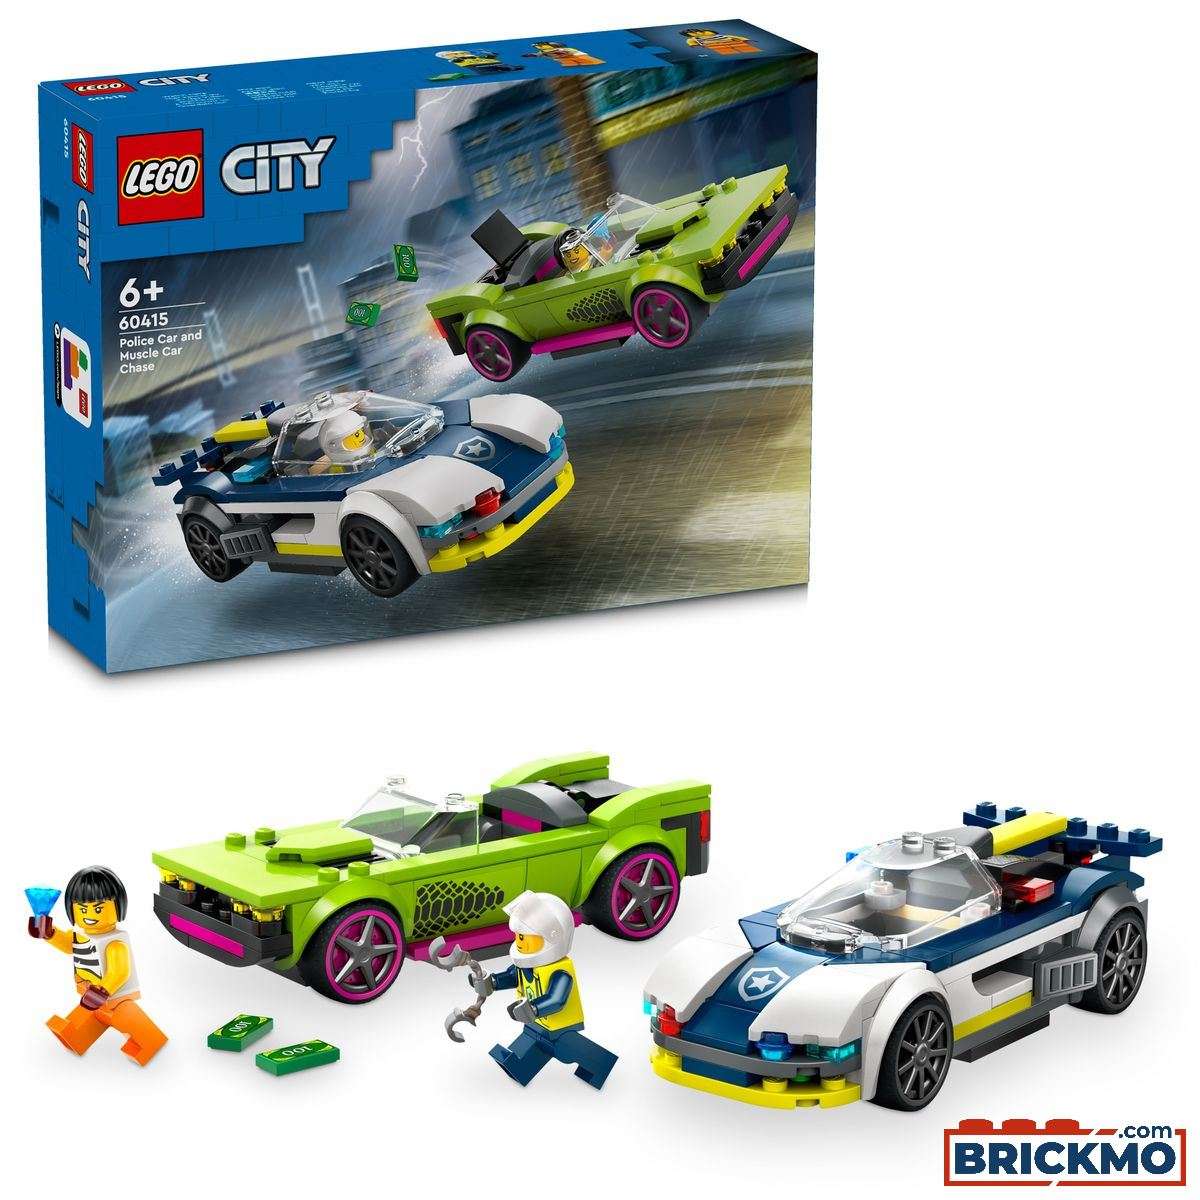 LEGO City 60415 Politiewagen en snelle autoachtervolging 60415